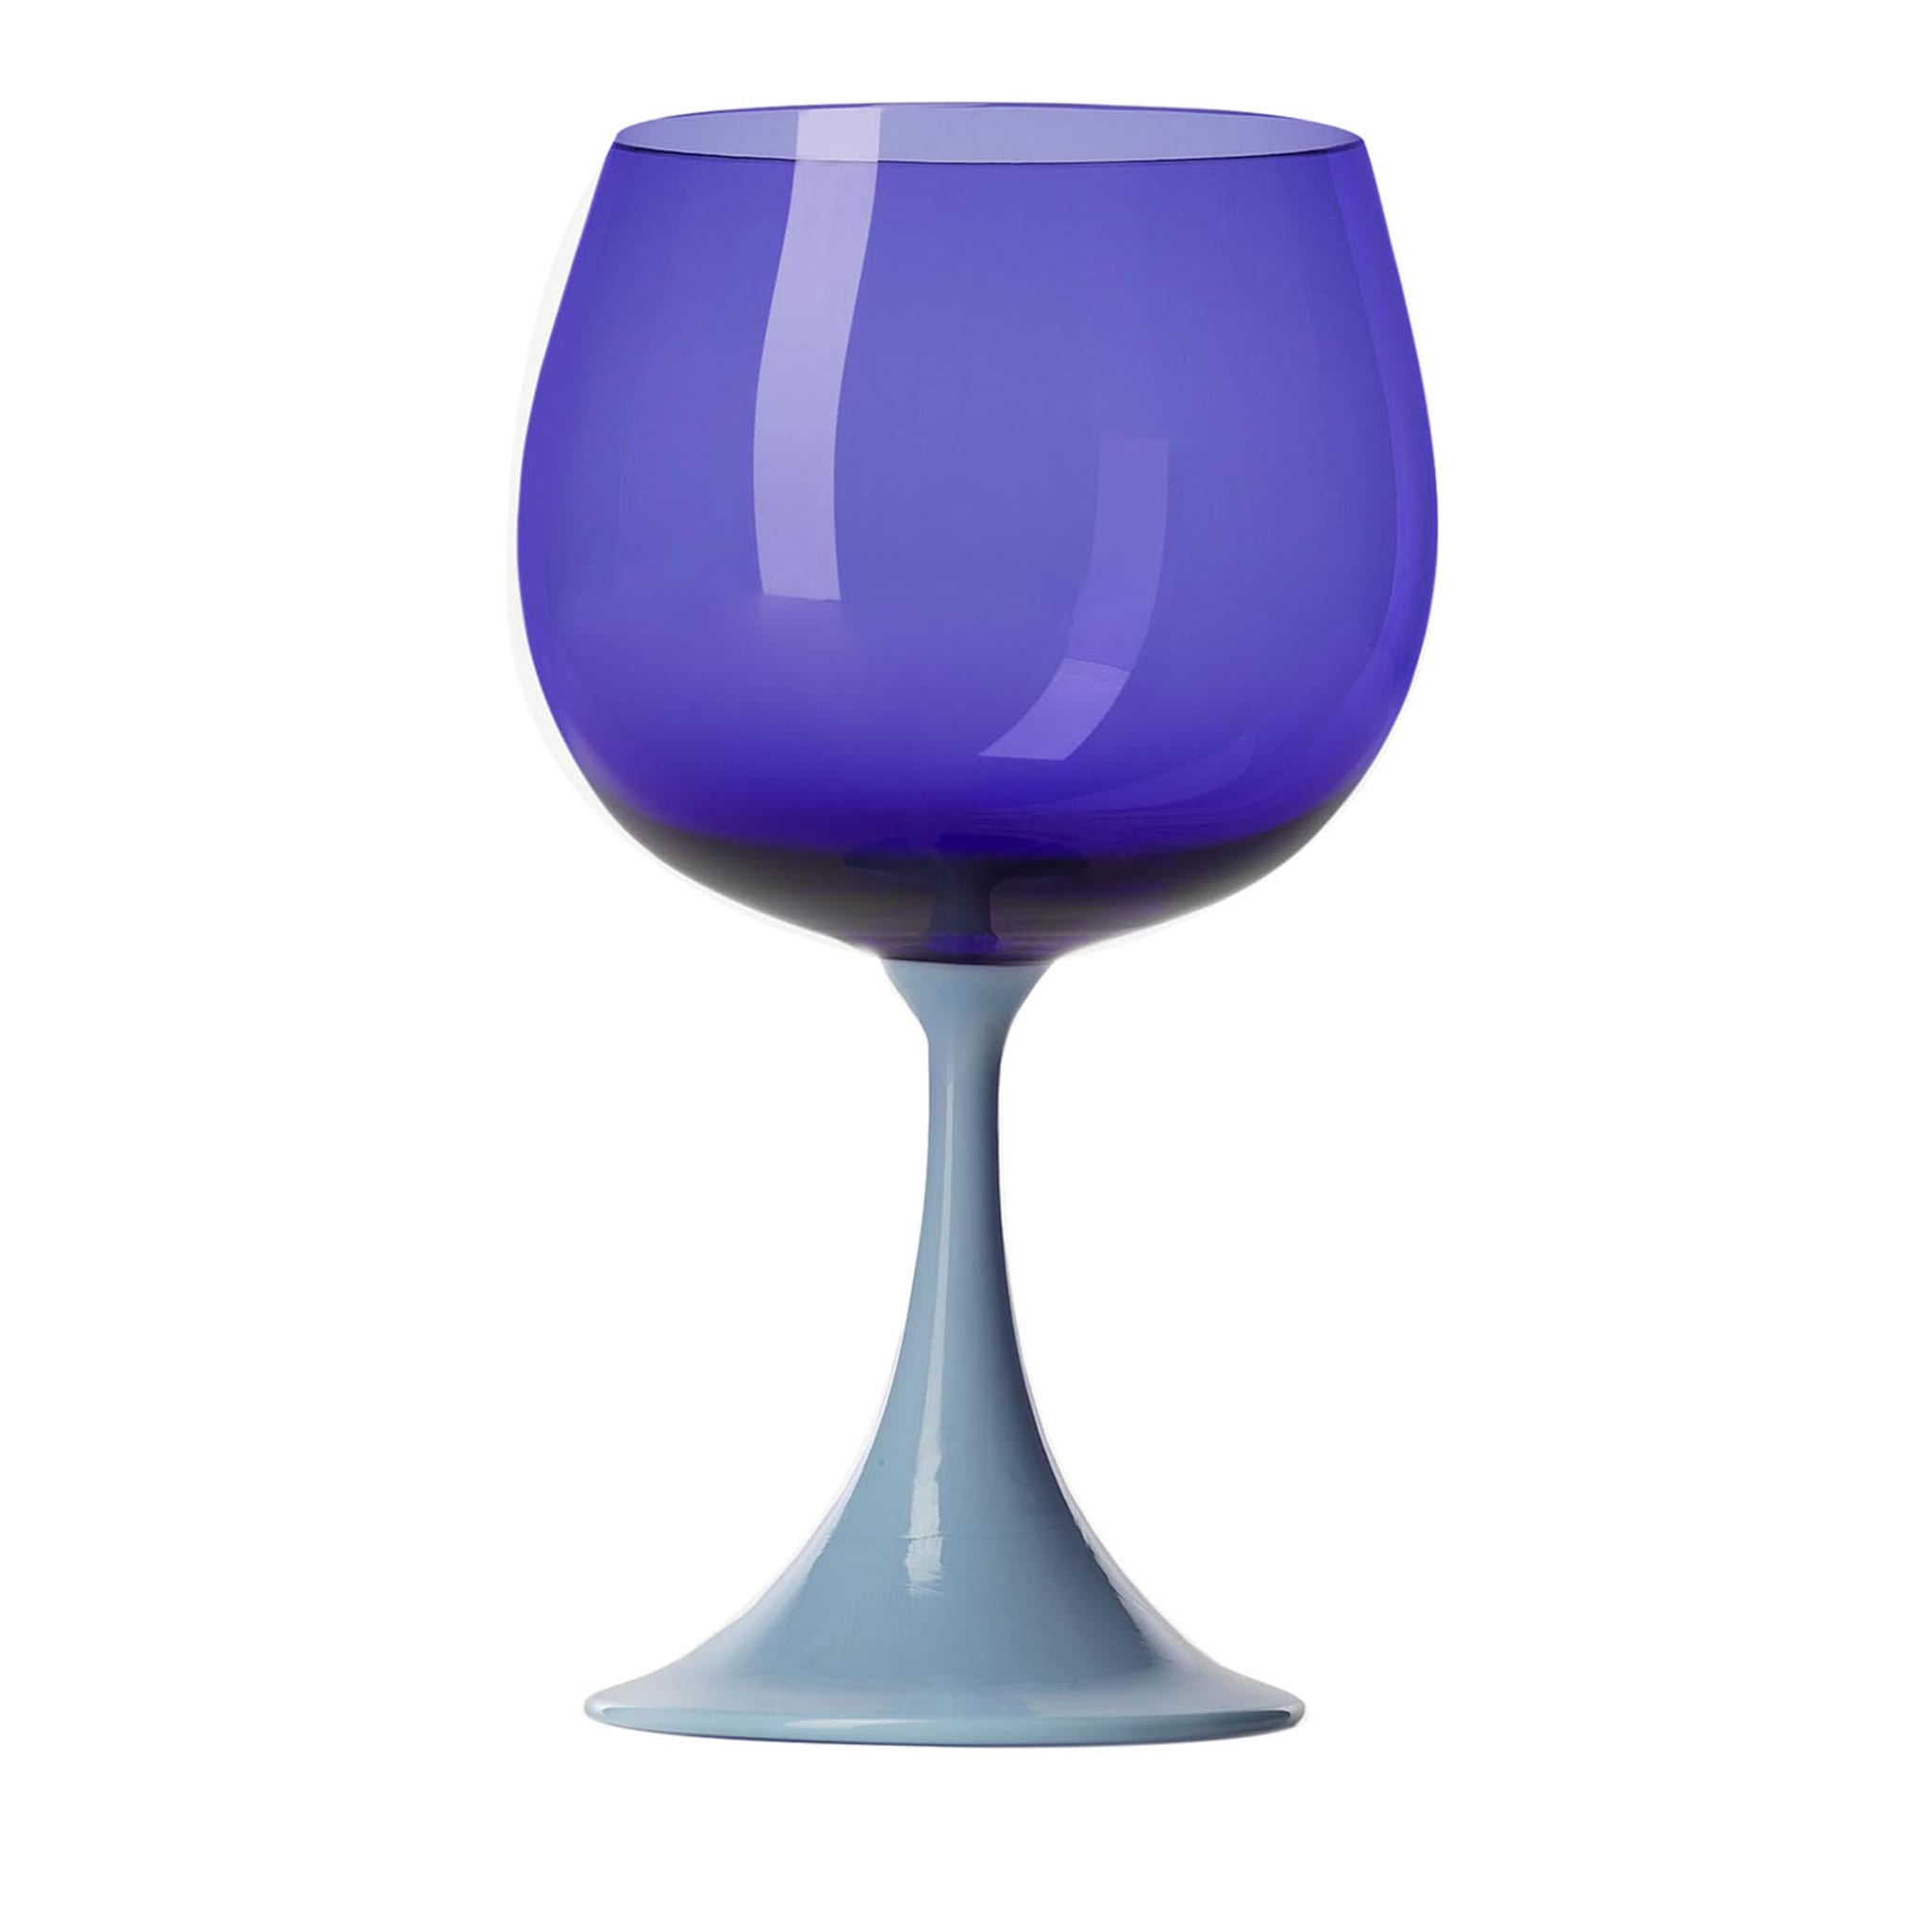 Burlesque Blue & Light-Blue Stem Glass by Stefano Marcato - Main view